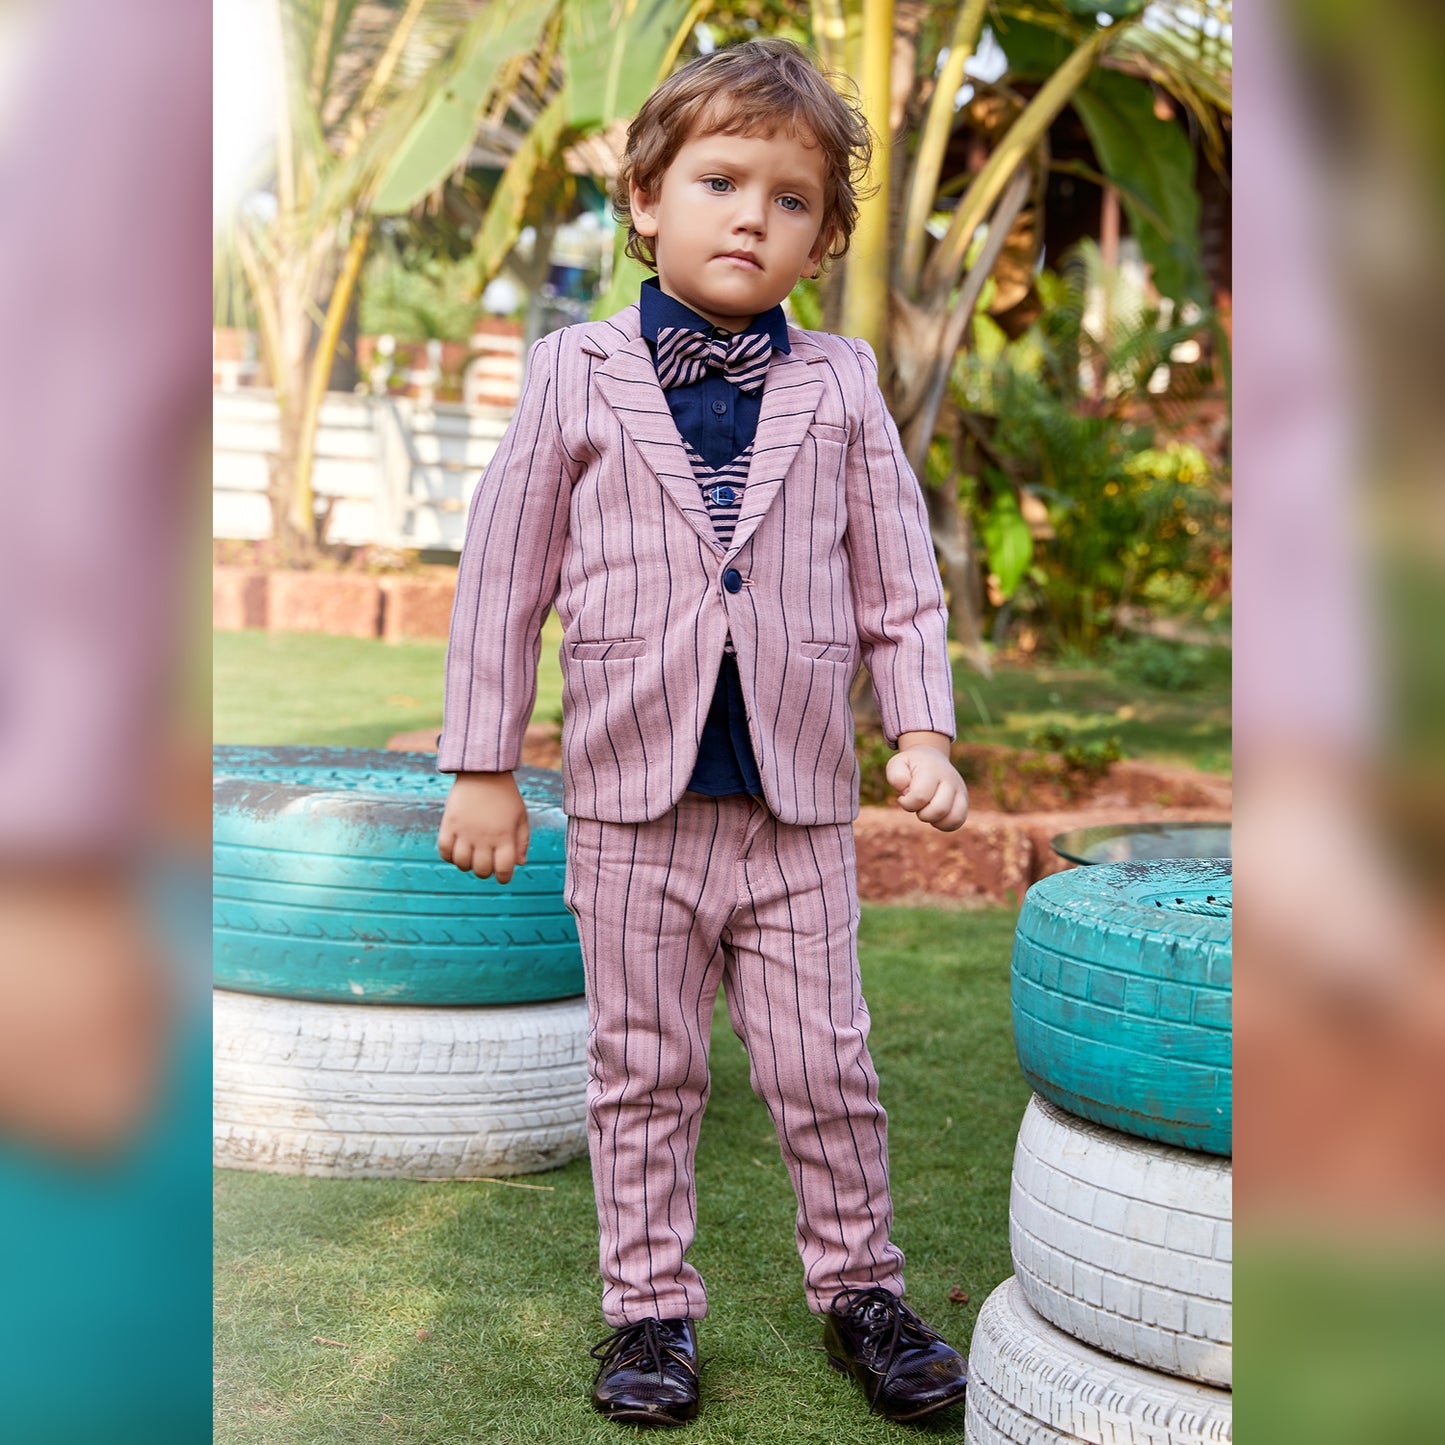 Little Gentlemen's Soirée: Class & Charm in Our Party Outfit!